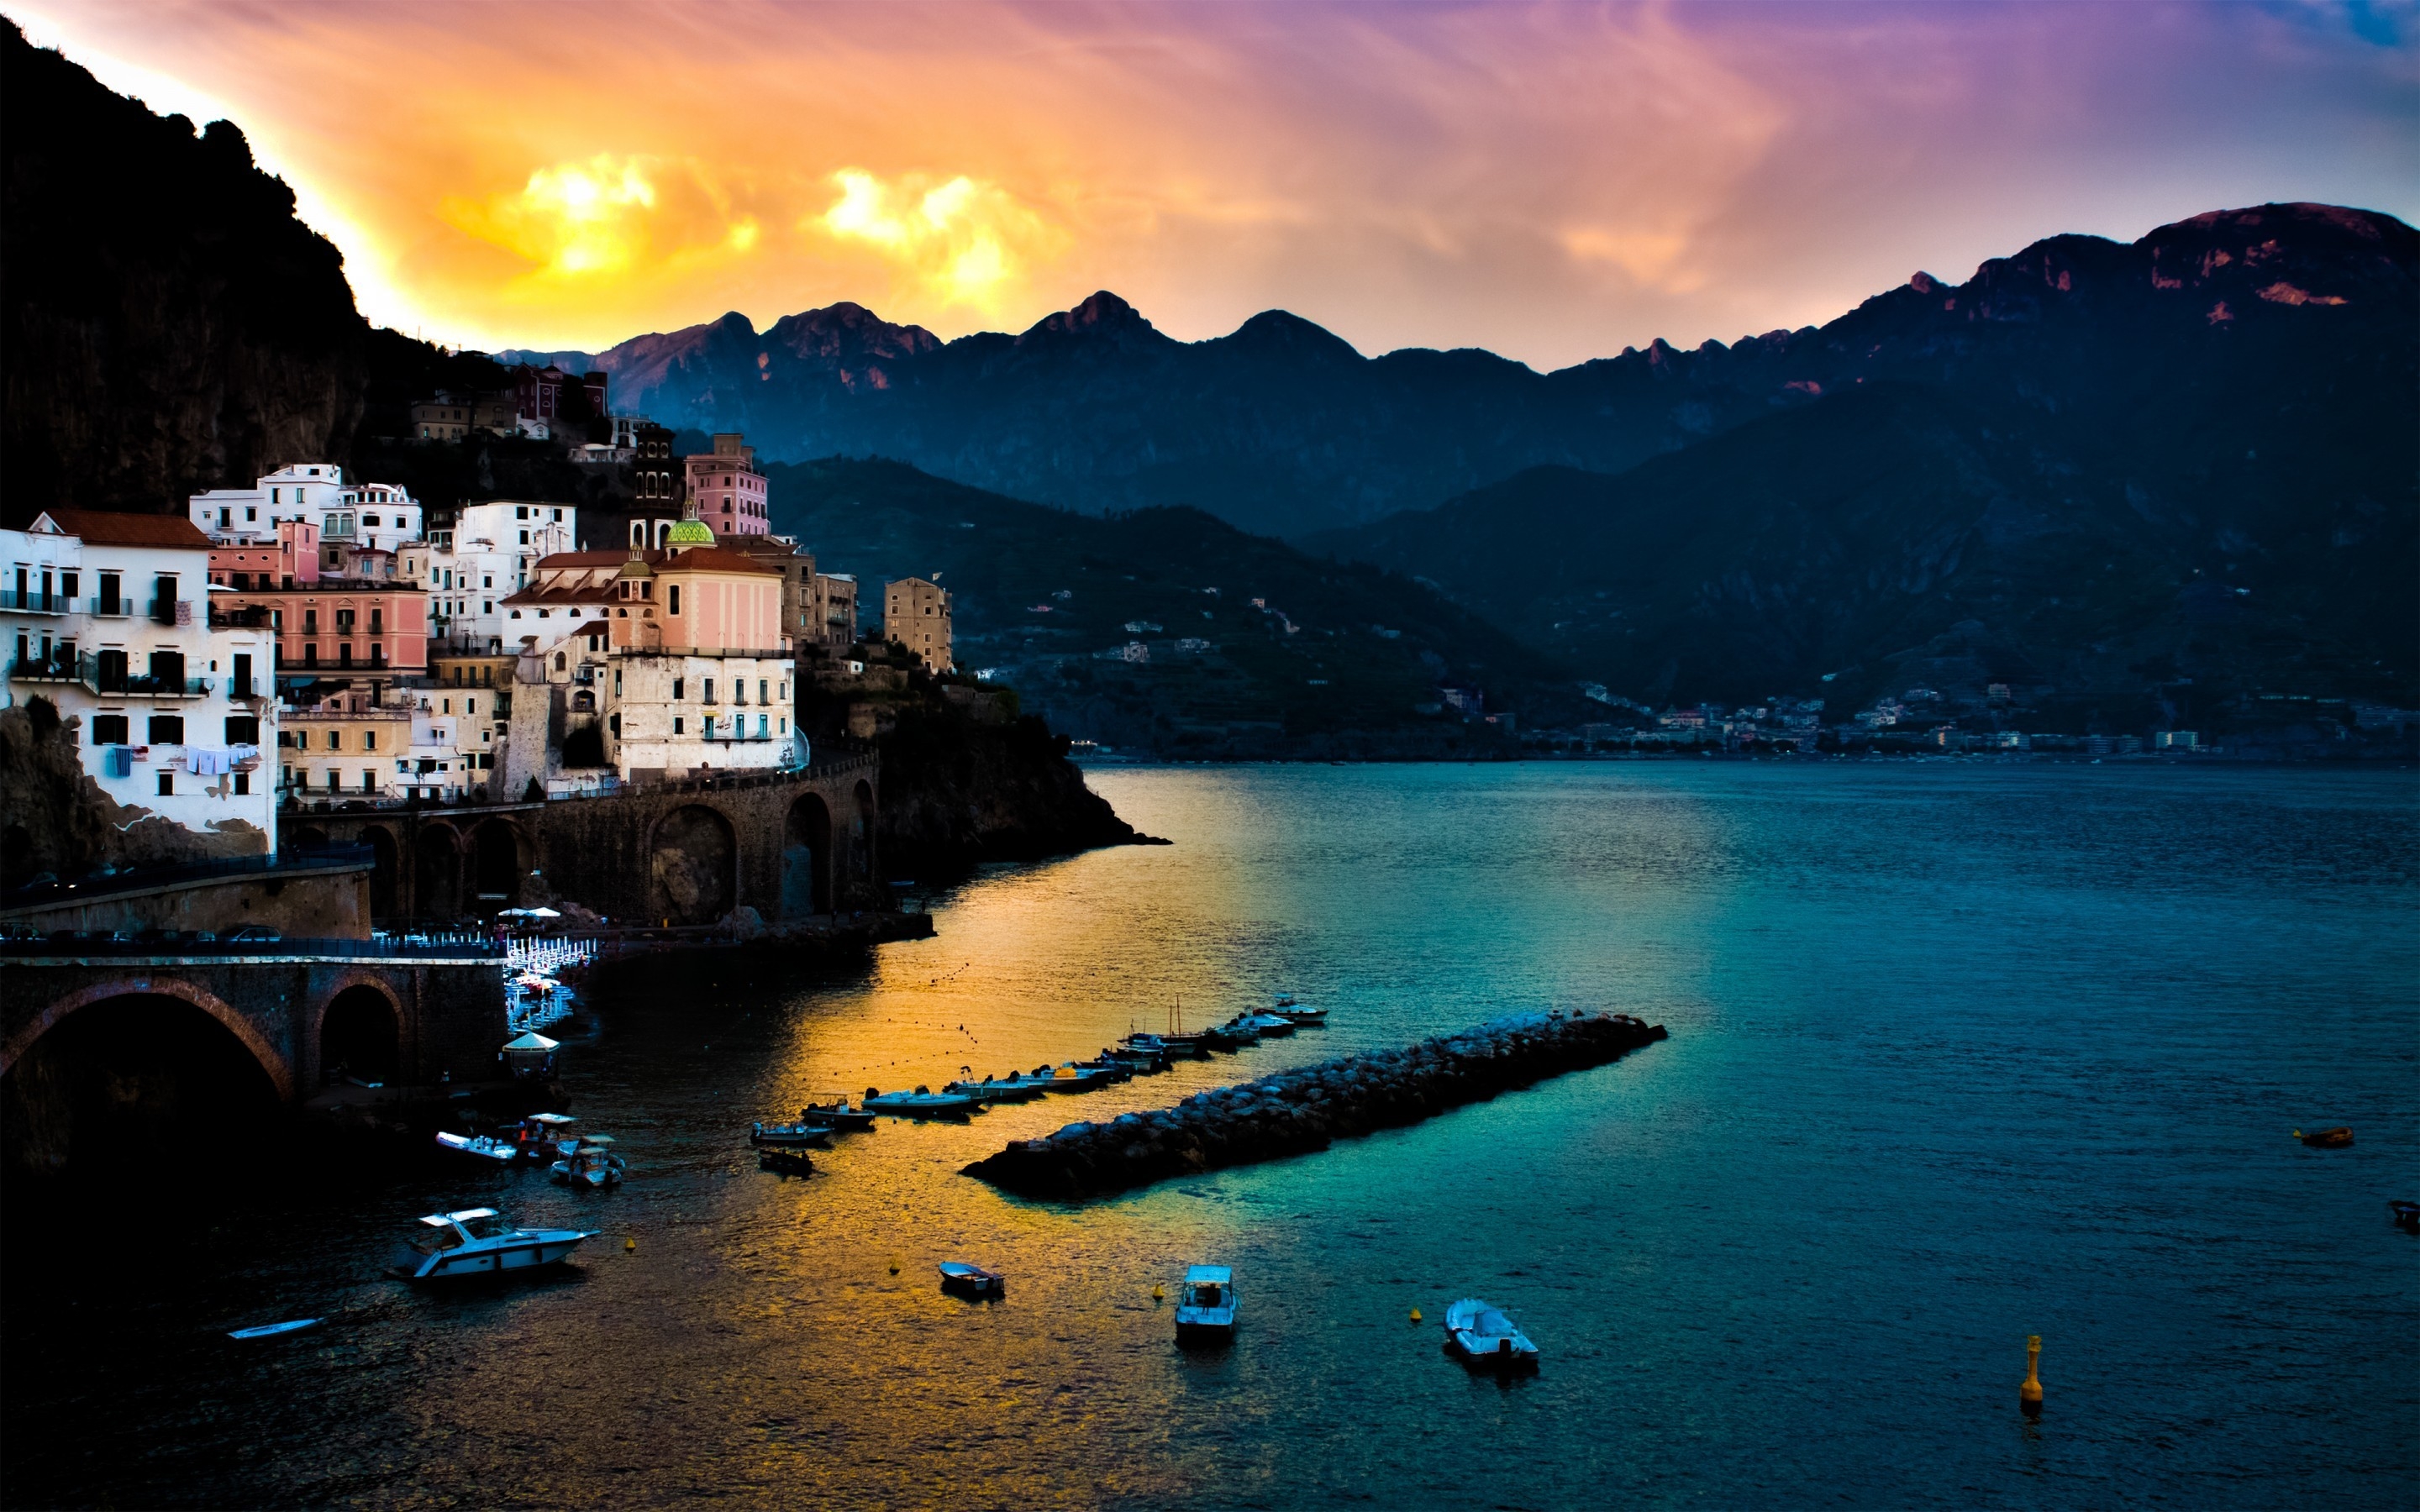 Amalfi Coast Landscape for 2880 x 1800 Retina Display resolution